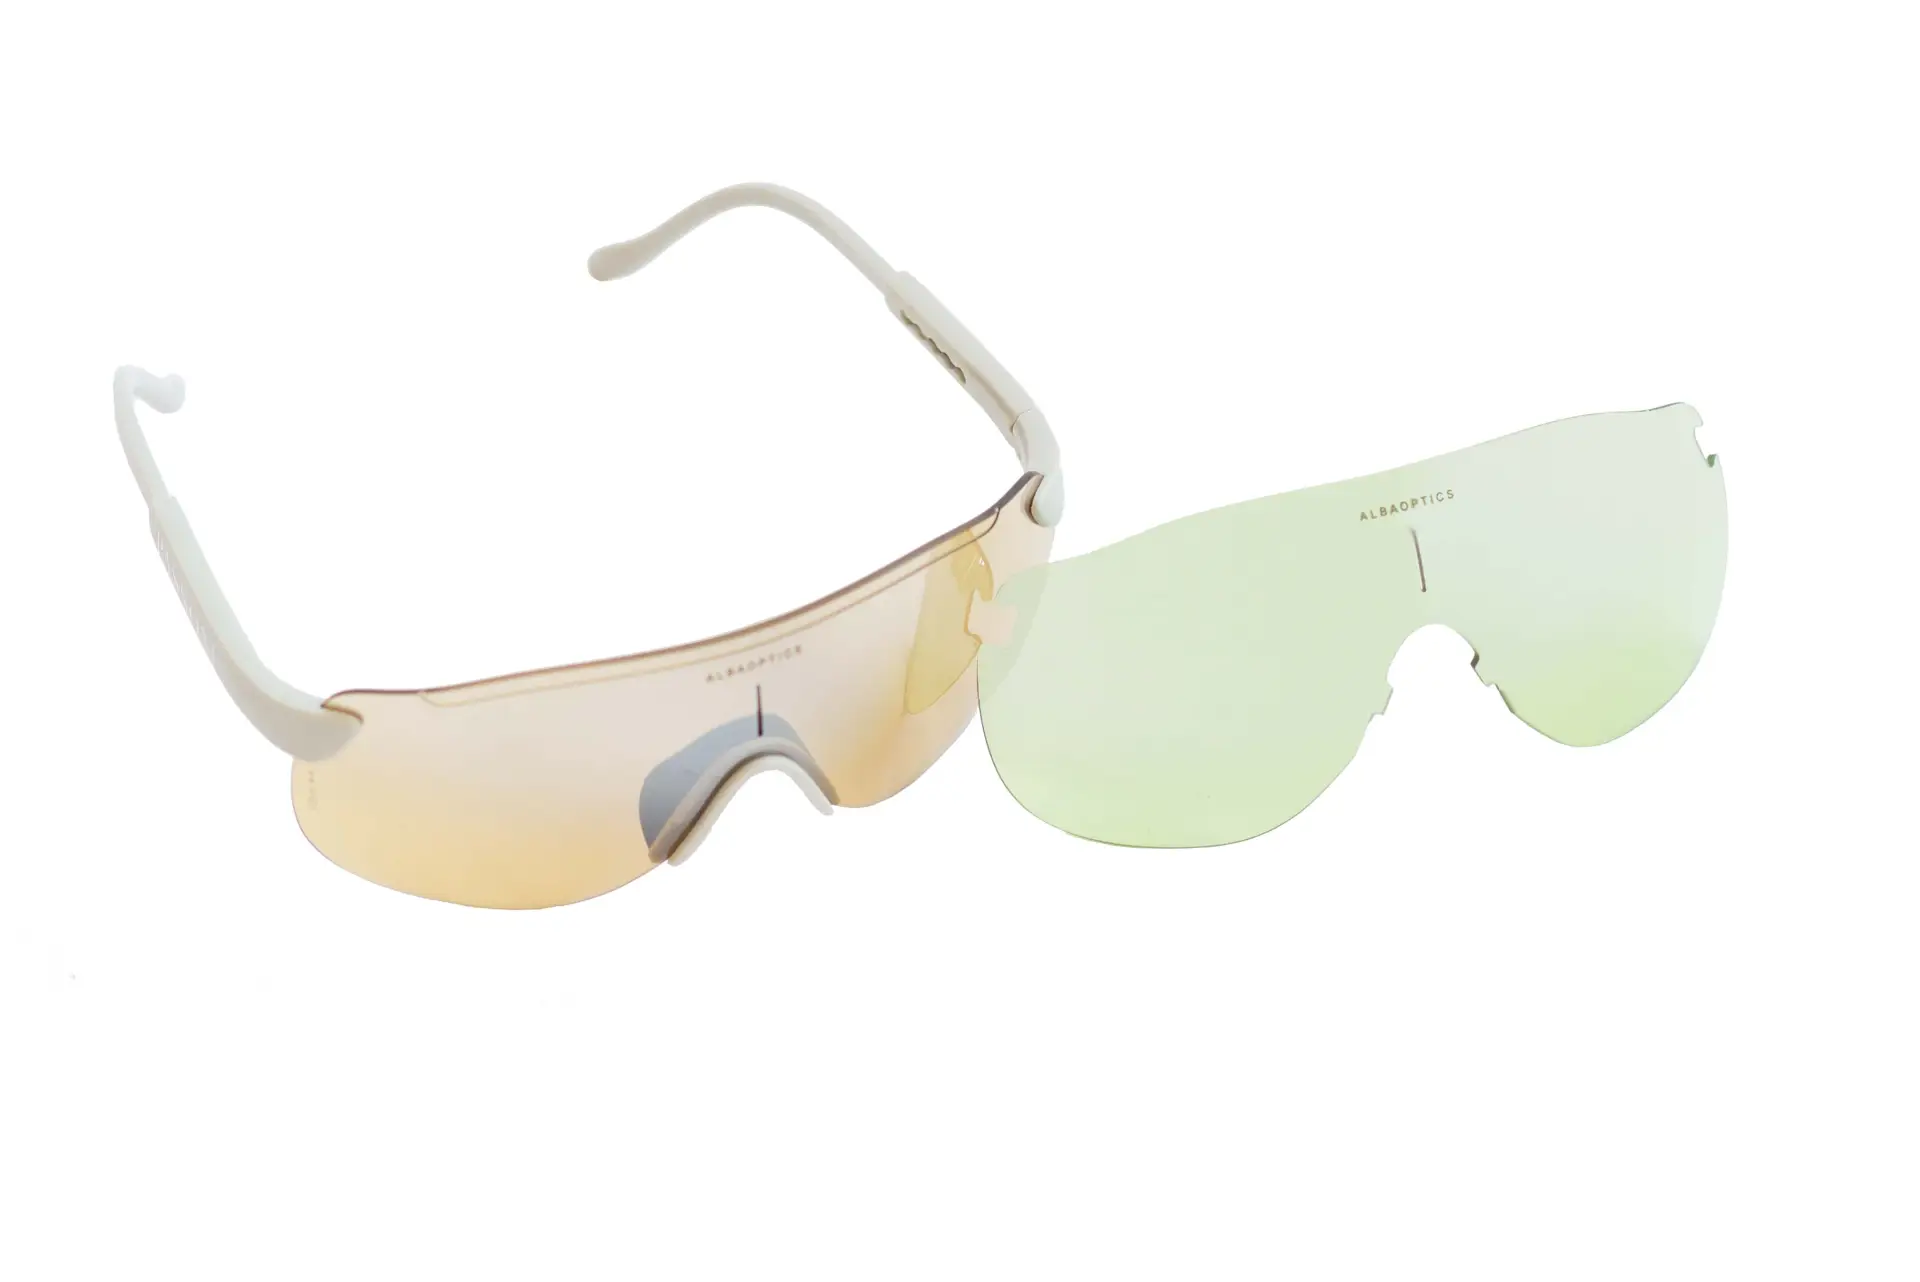 Albaoptics x Passoni sunglasses